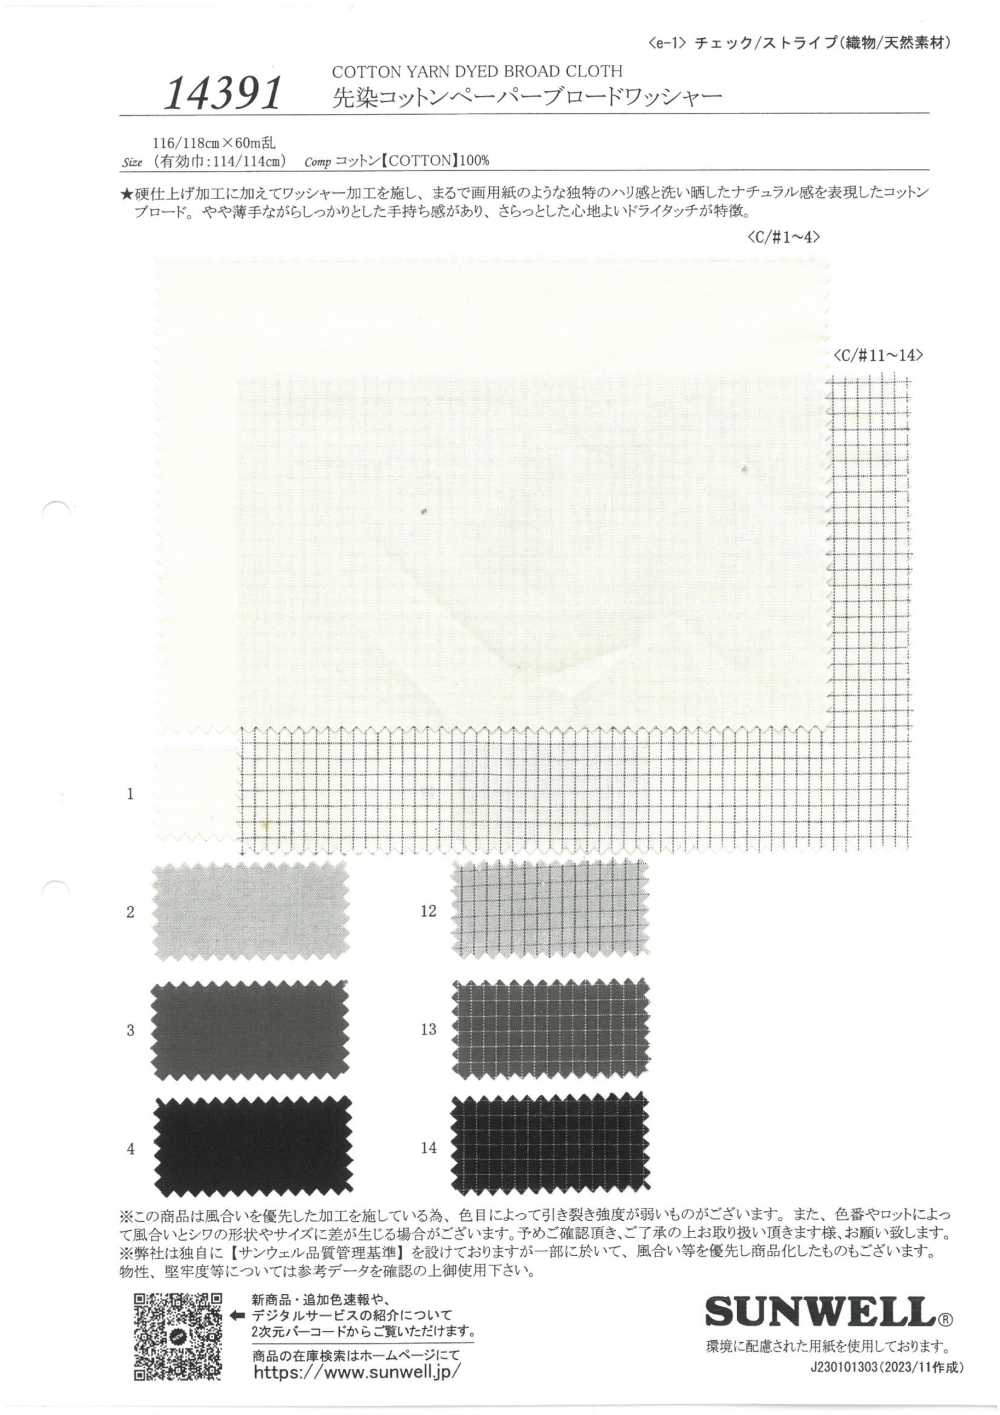 14391 Yarn-dyed Cotton Paper Broadcloth Washer Processing[Textile / Fabric]  SUNWELL/Okura Shoji Co., Ltd. - ApparelX